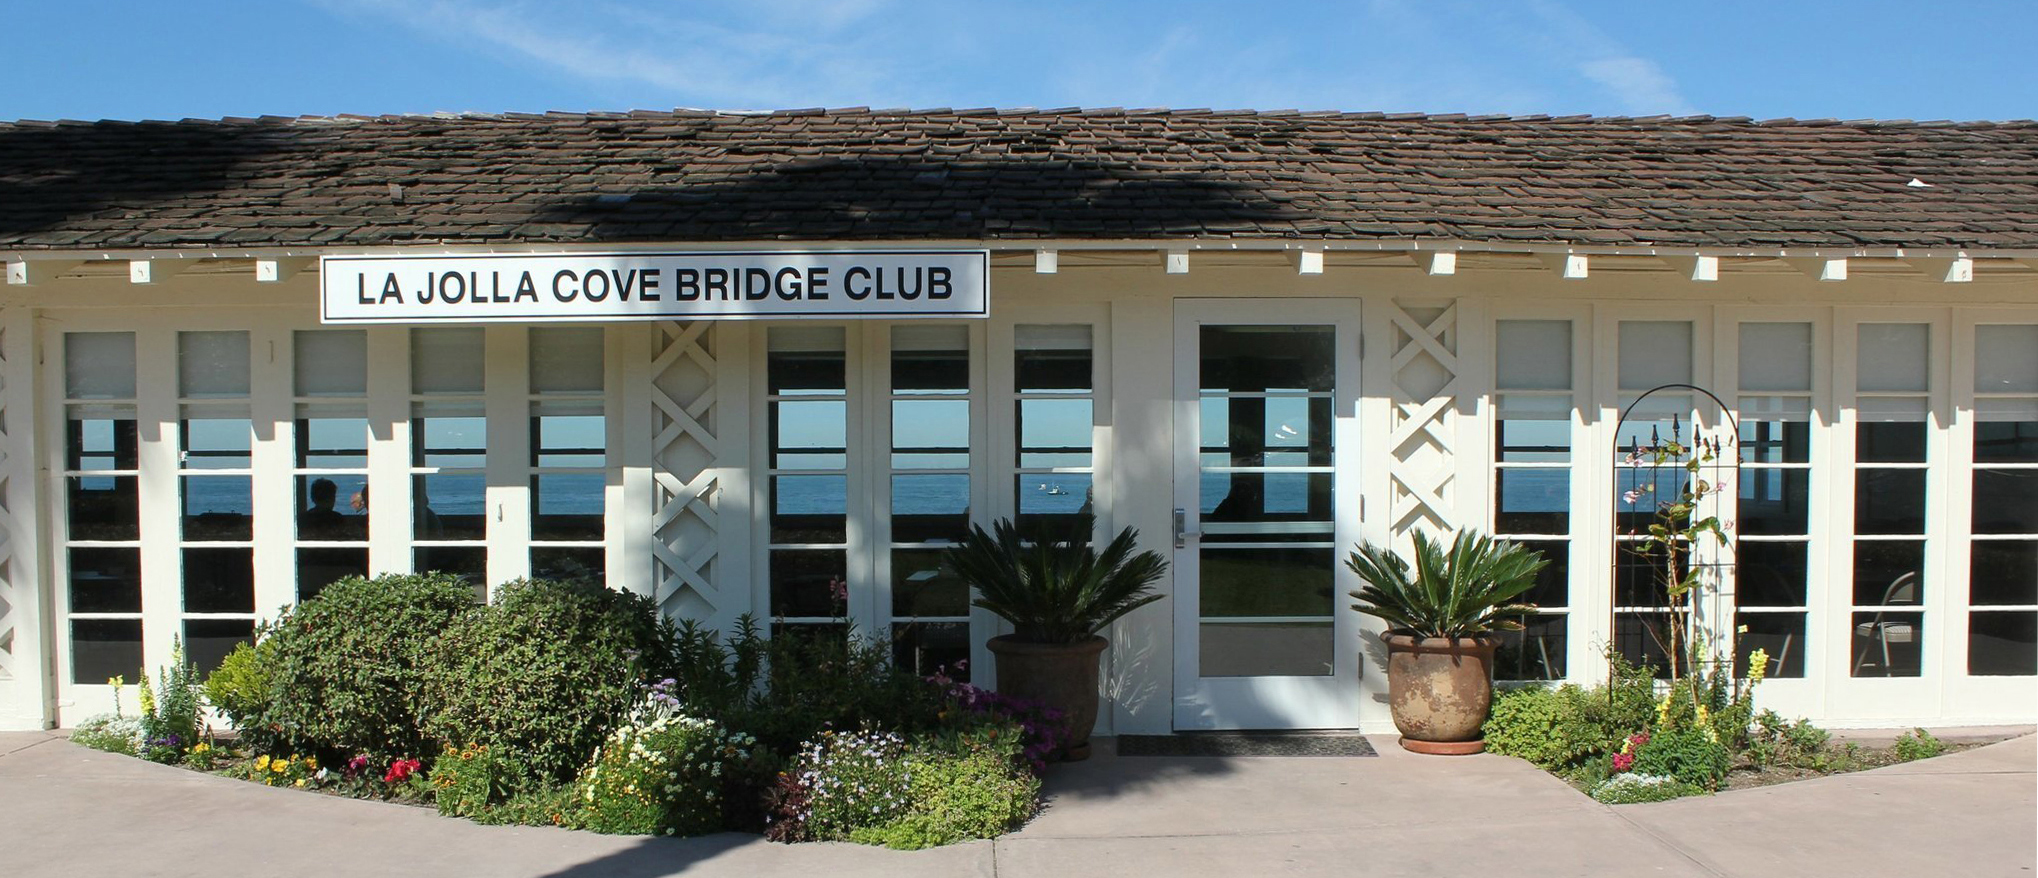 View of La Jolla Cove Bridge Club Building (facing ocean, image)